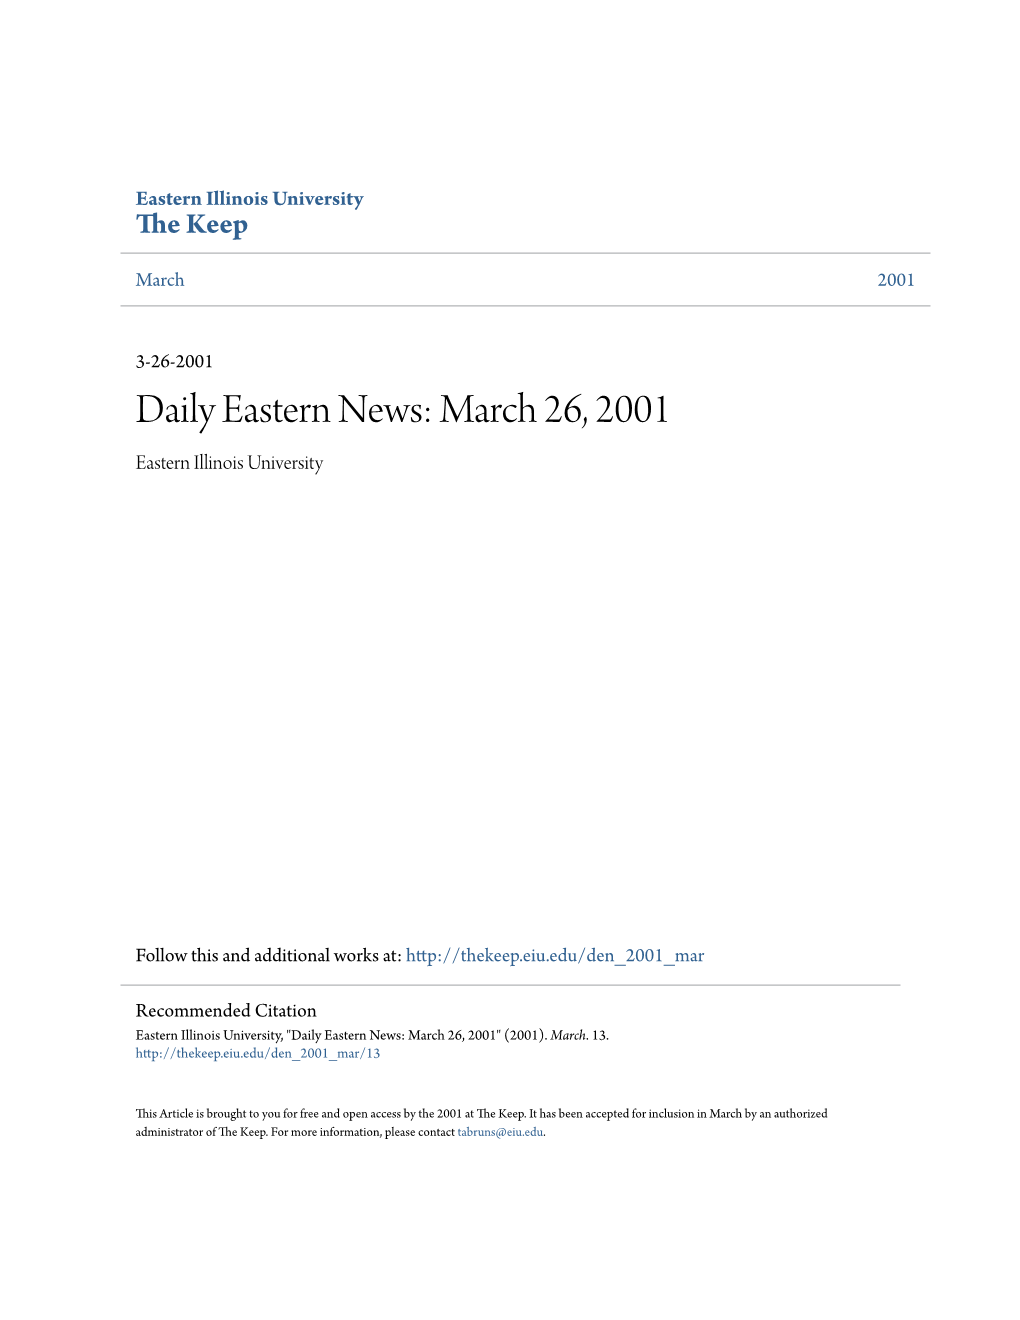 Eastern News: March 26, 2001 Eastern Illinois University